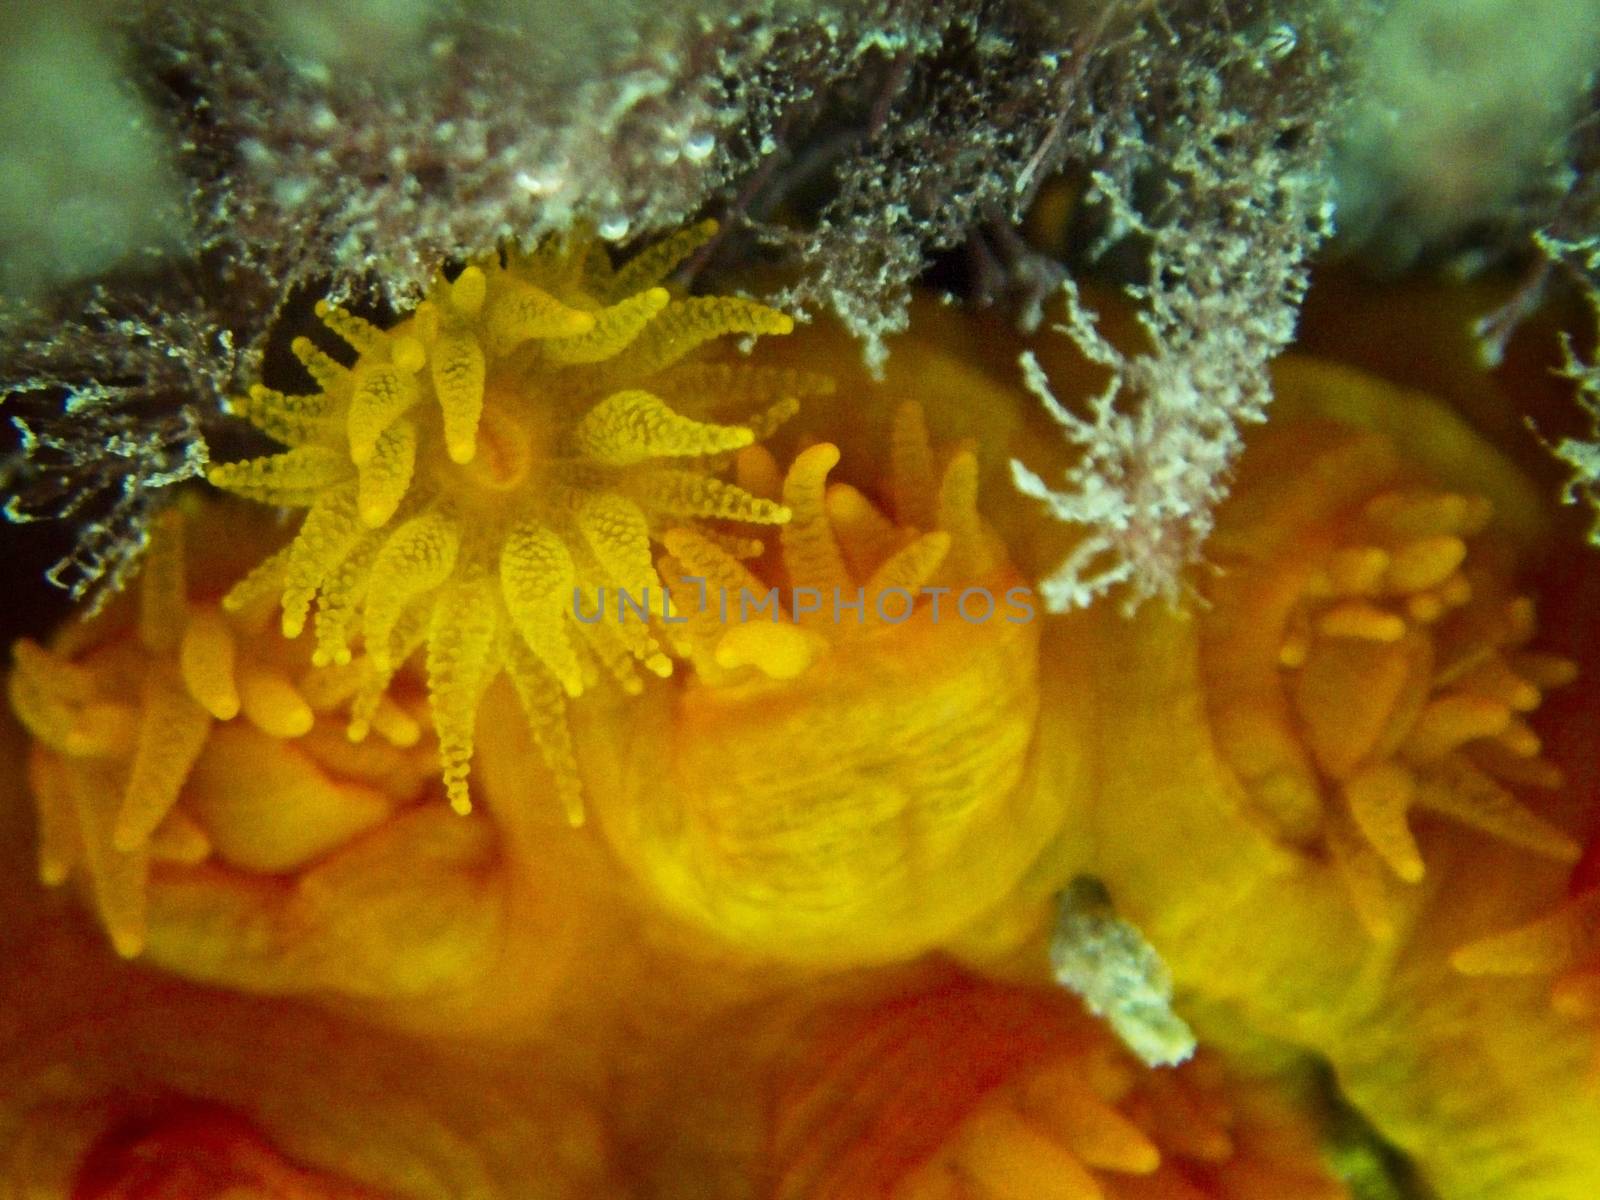 Orange Sun Coral by PhotoWorks